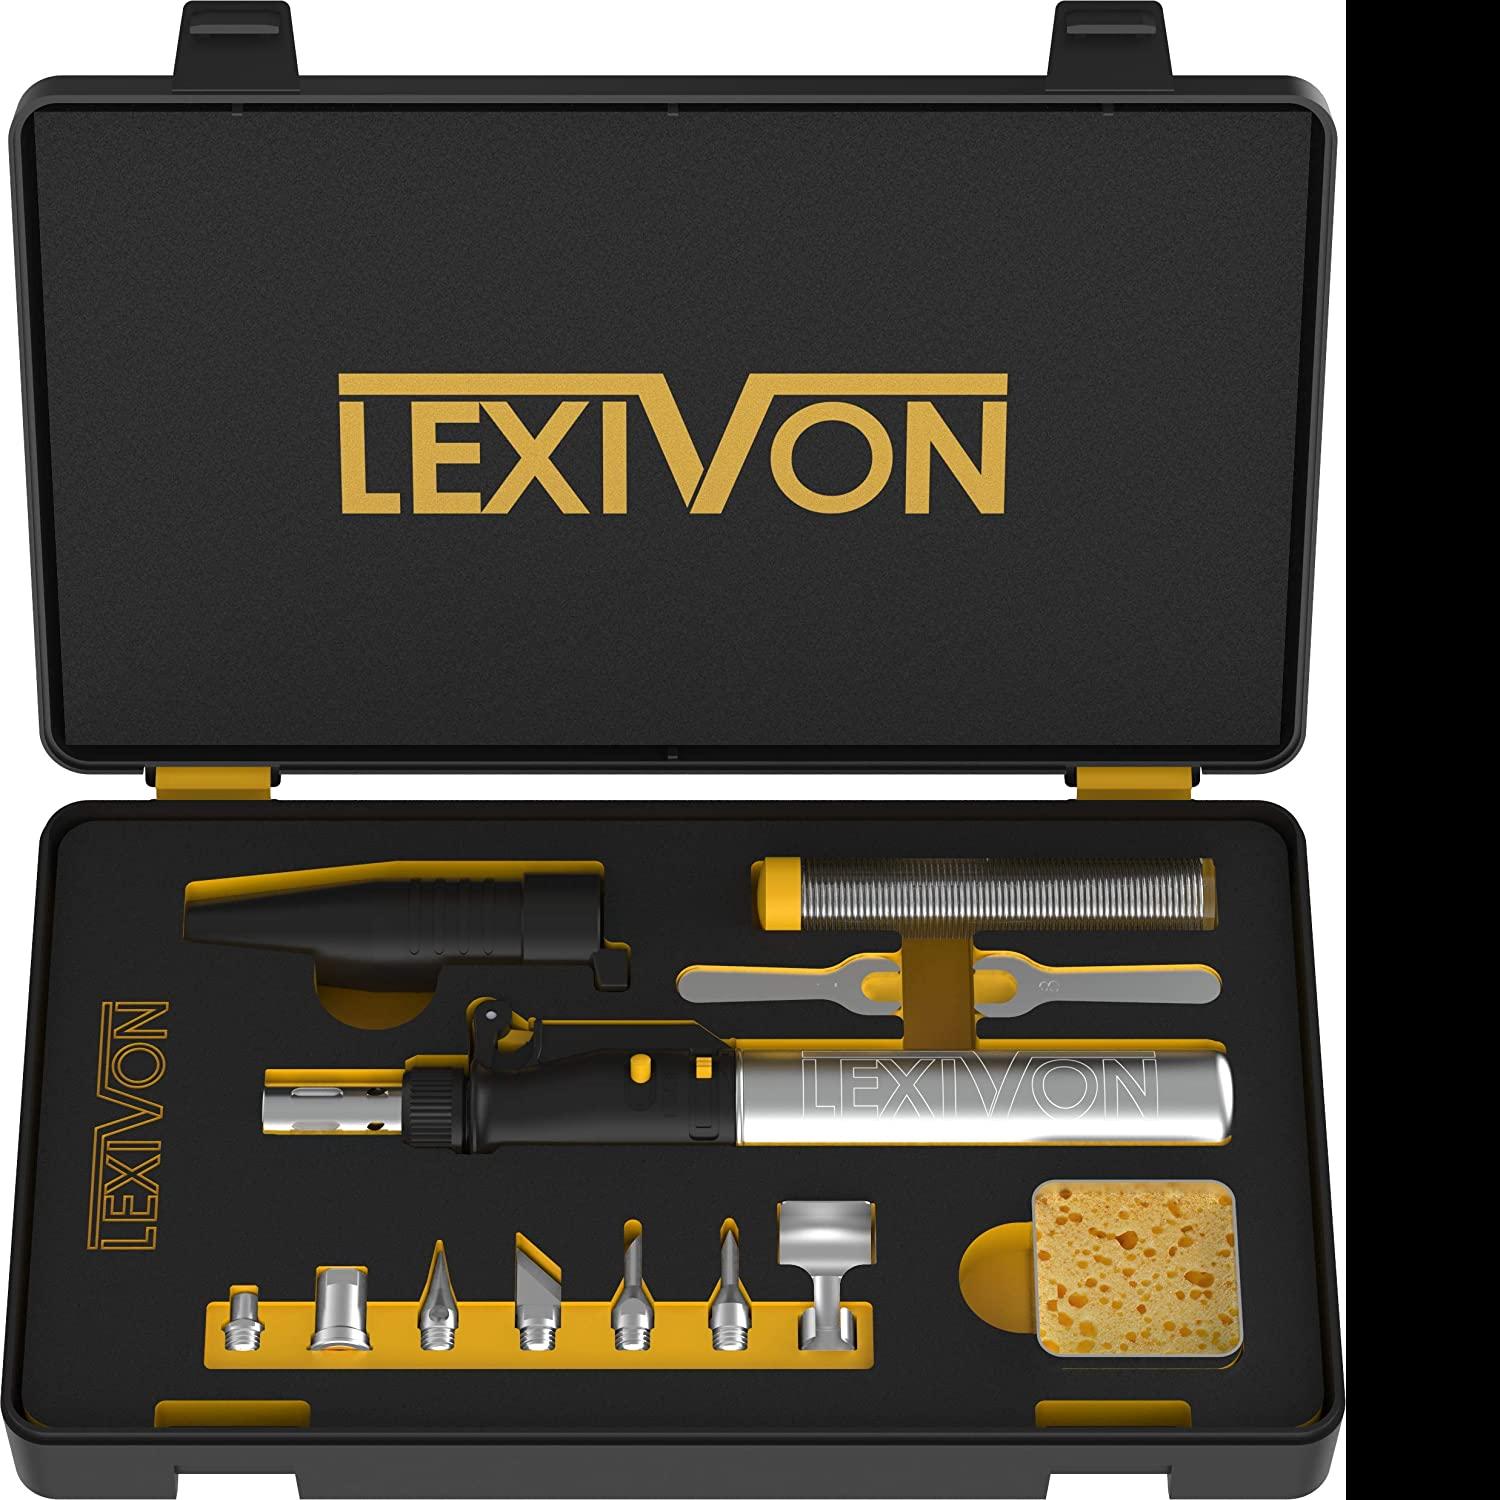 Lexivon LX-770 Butane Soldering Iron Multi-Purpose Kit for $24.55 Shipped